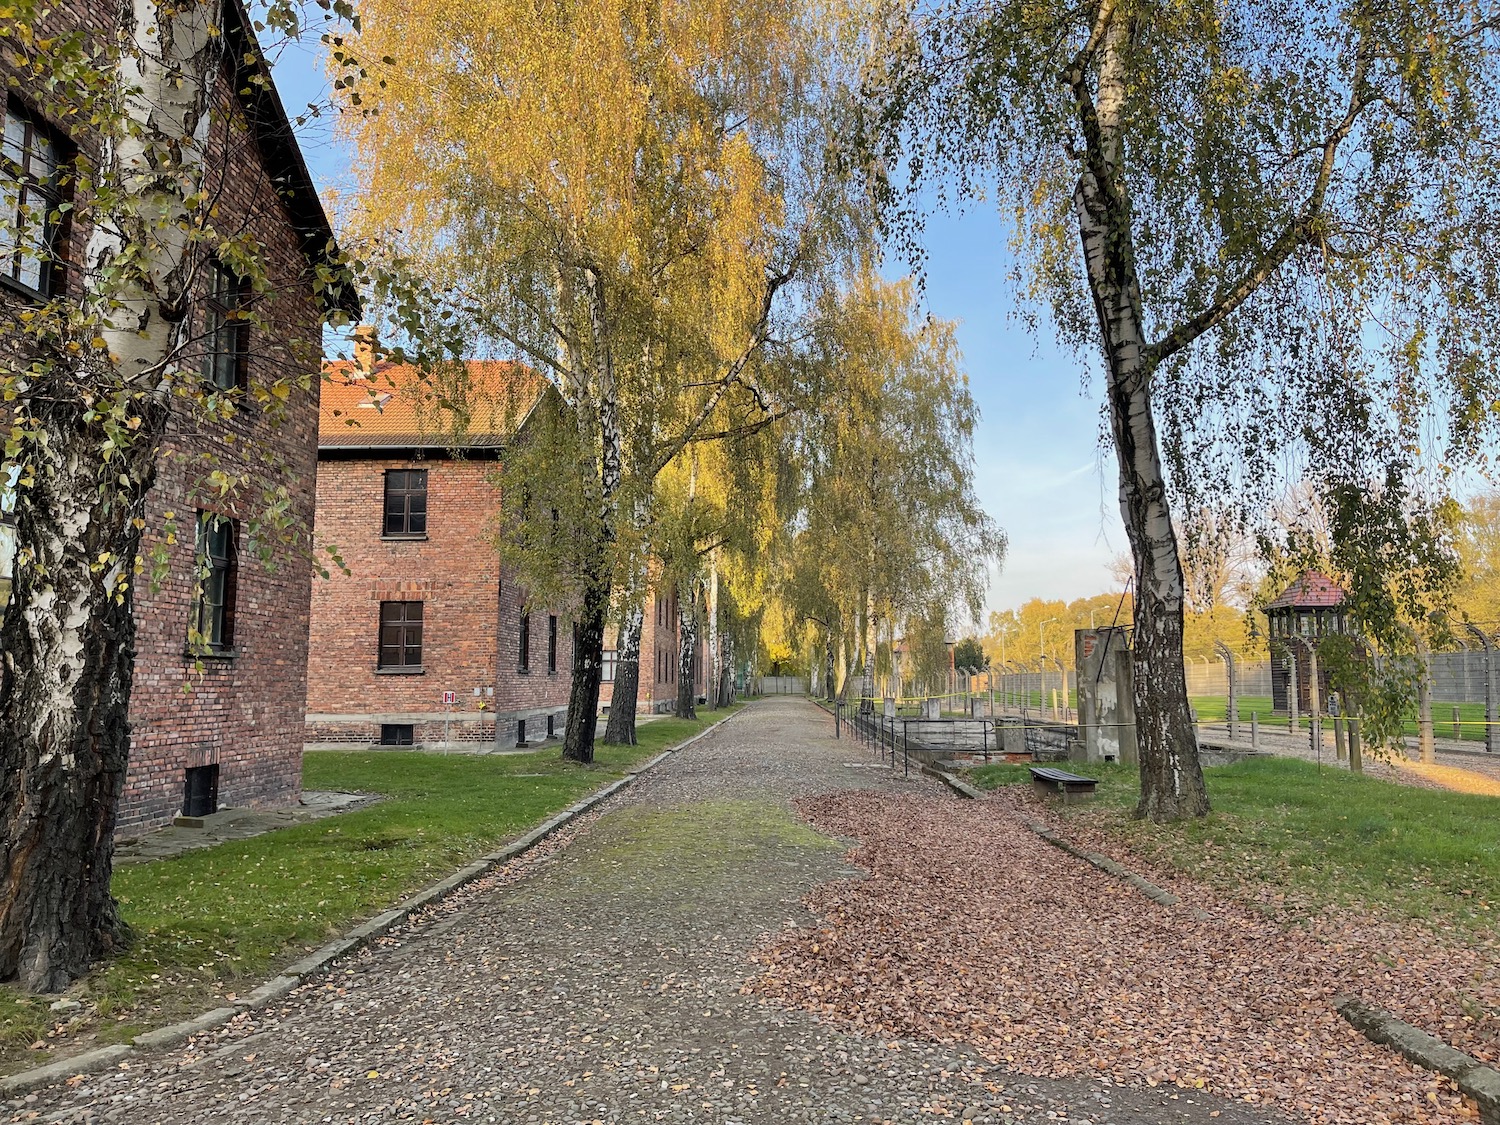 a brick buildings along a path